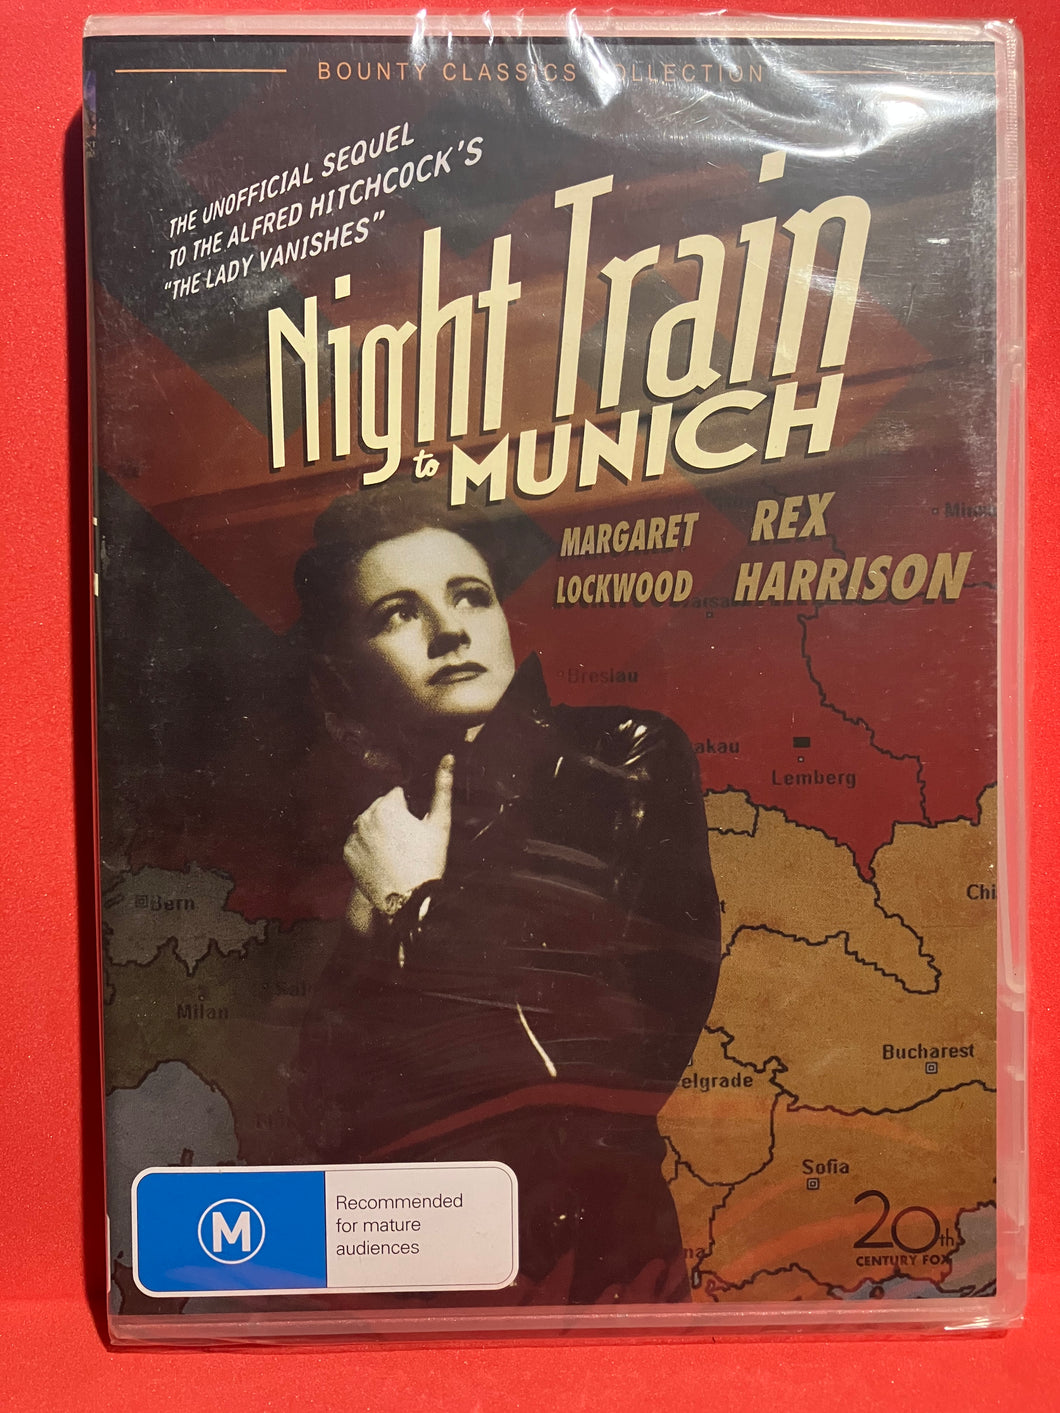 night train to munich dvd